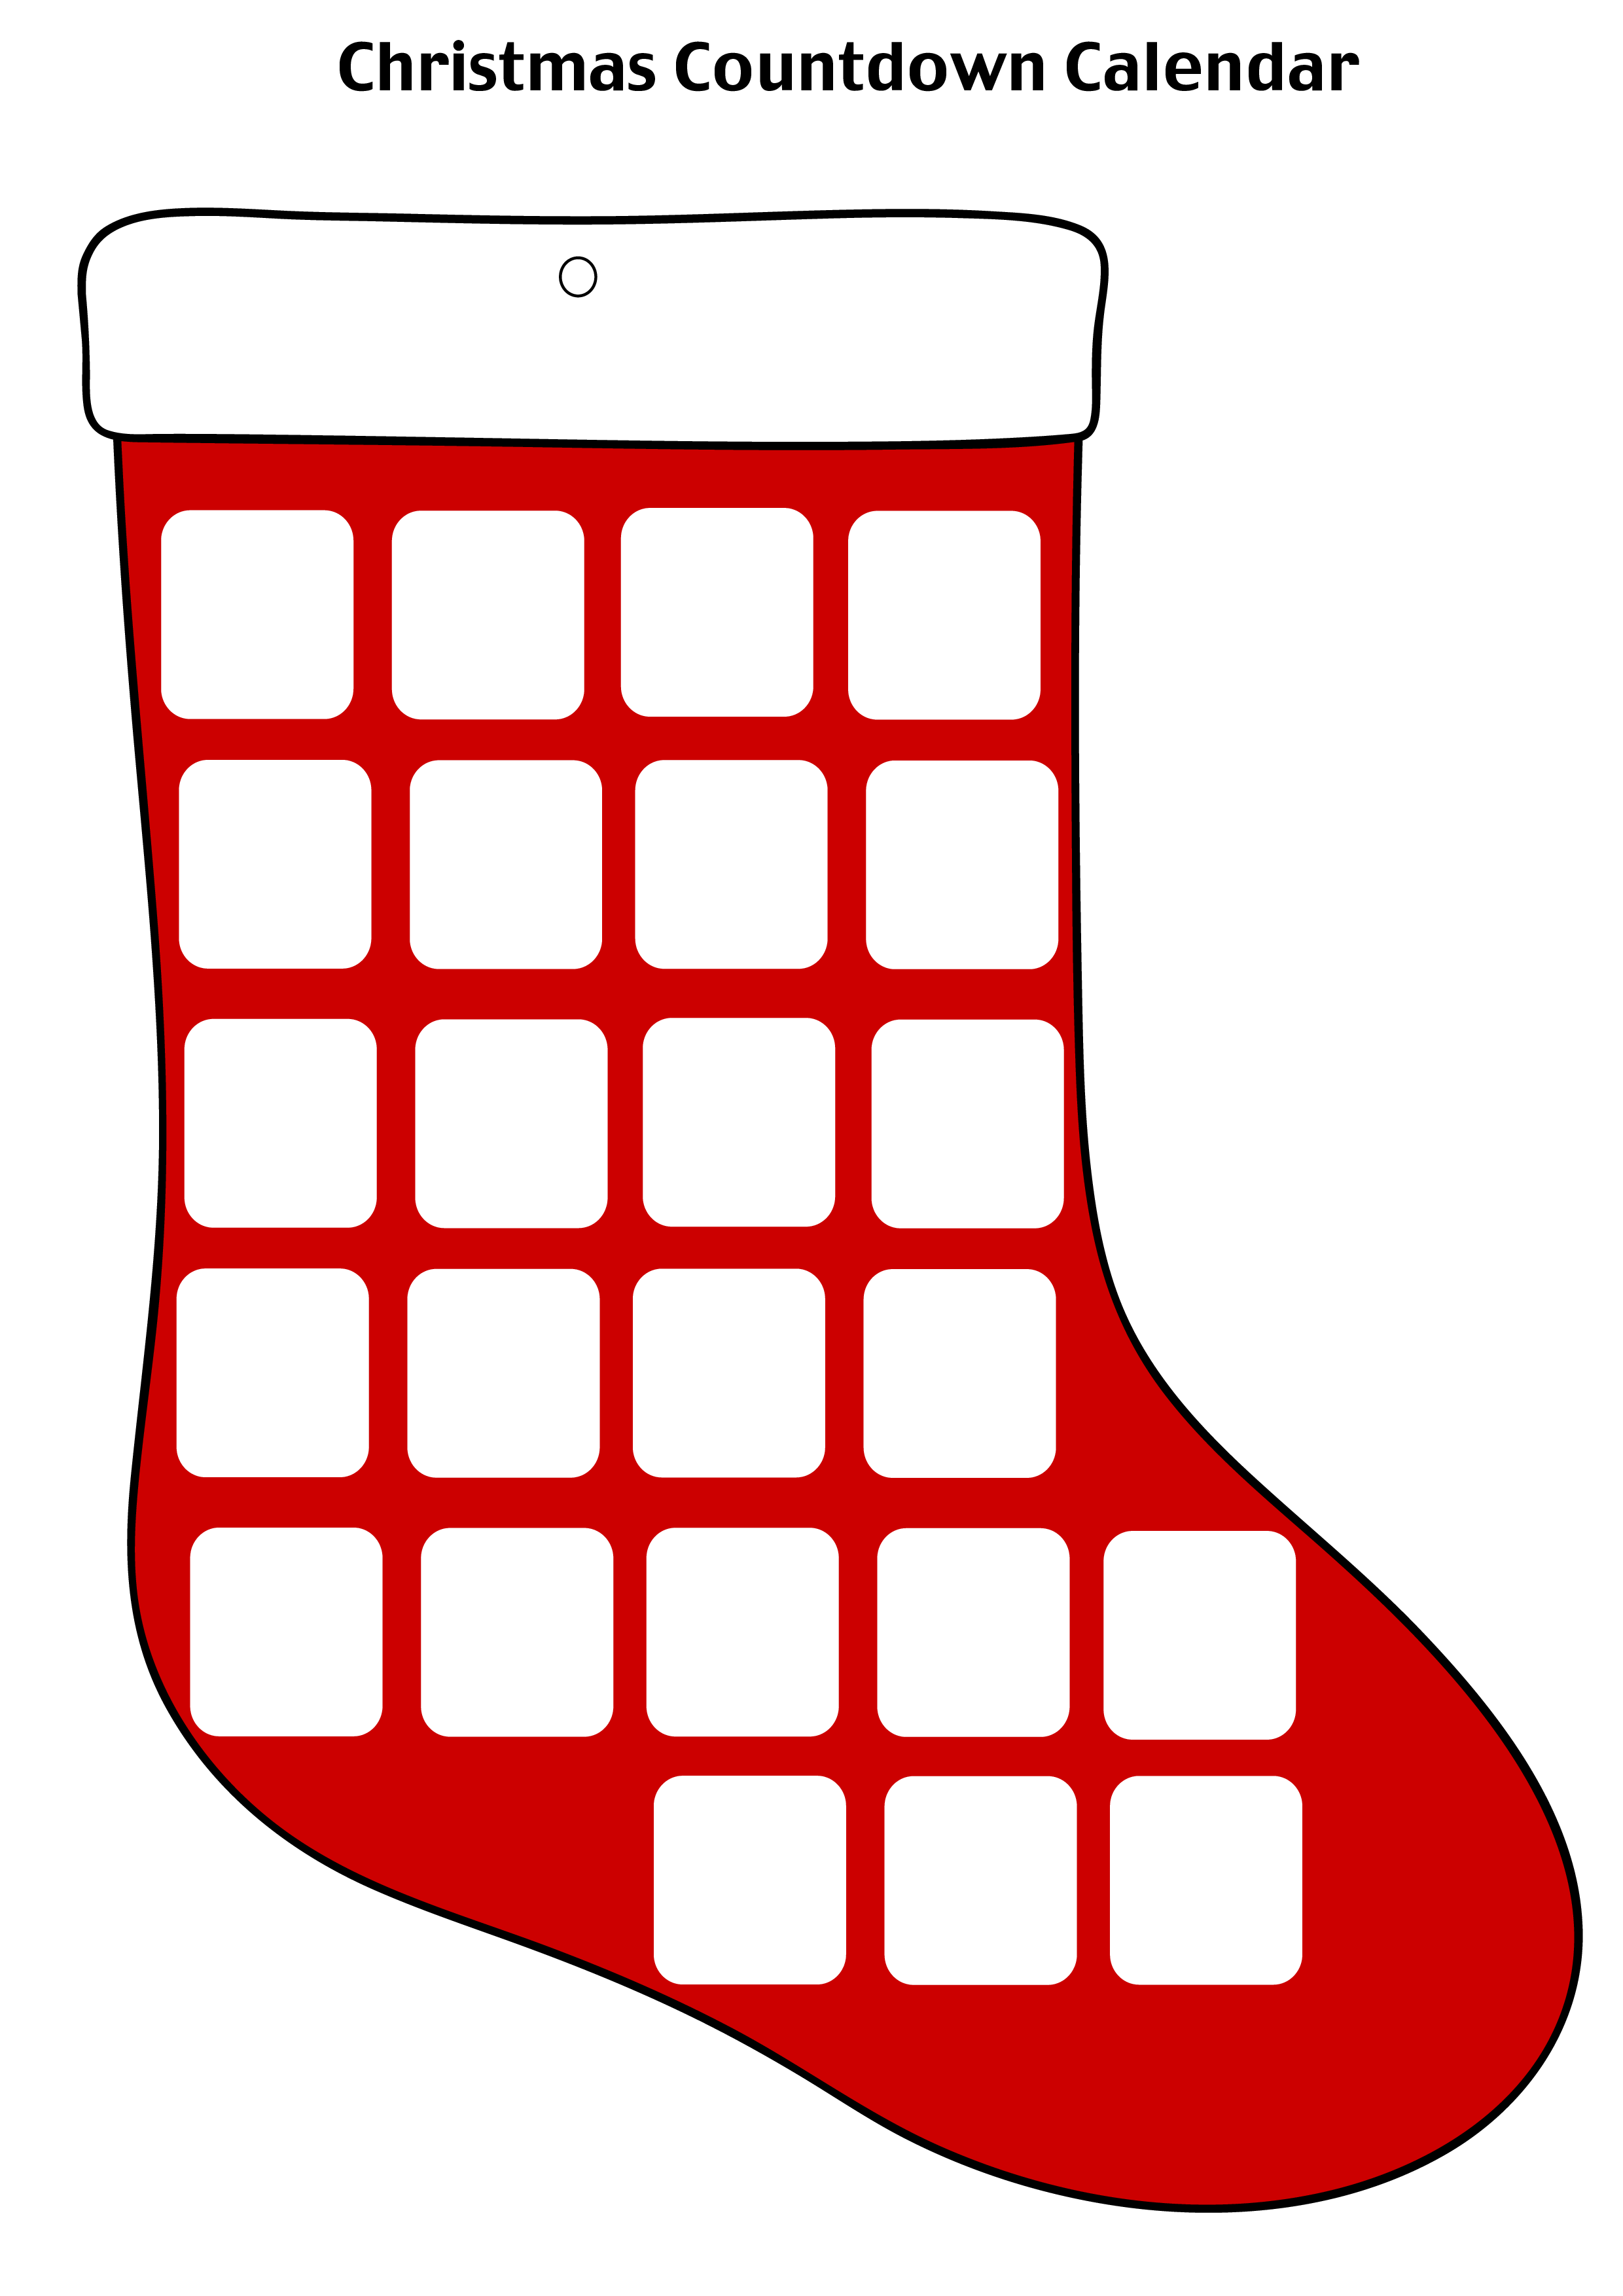 Christmas Countdown Calendar main image